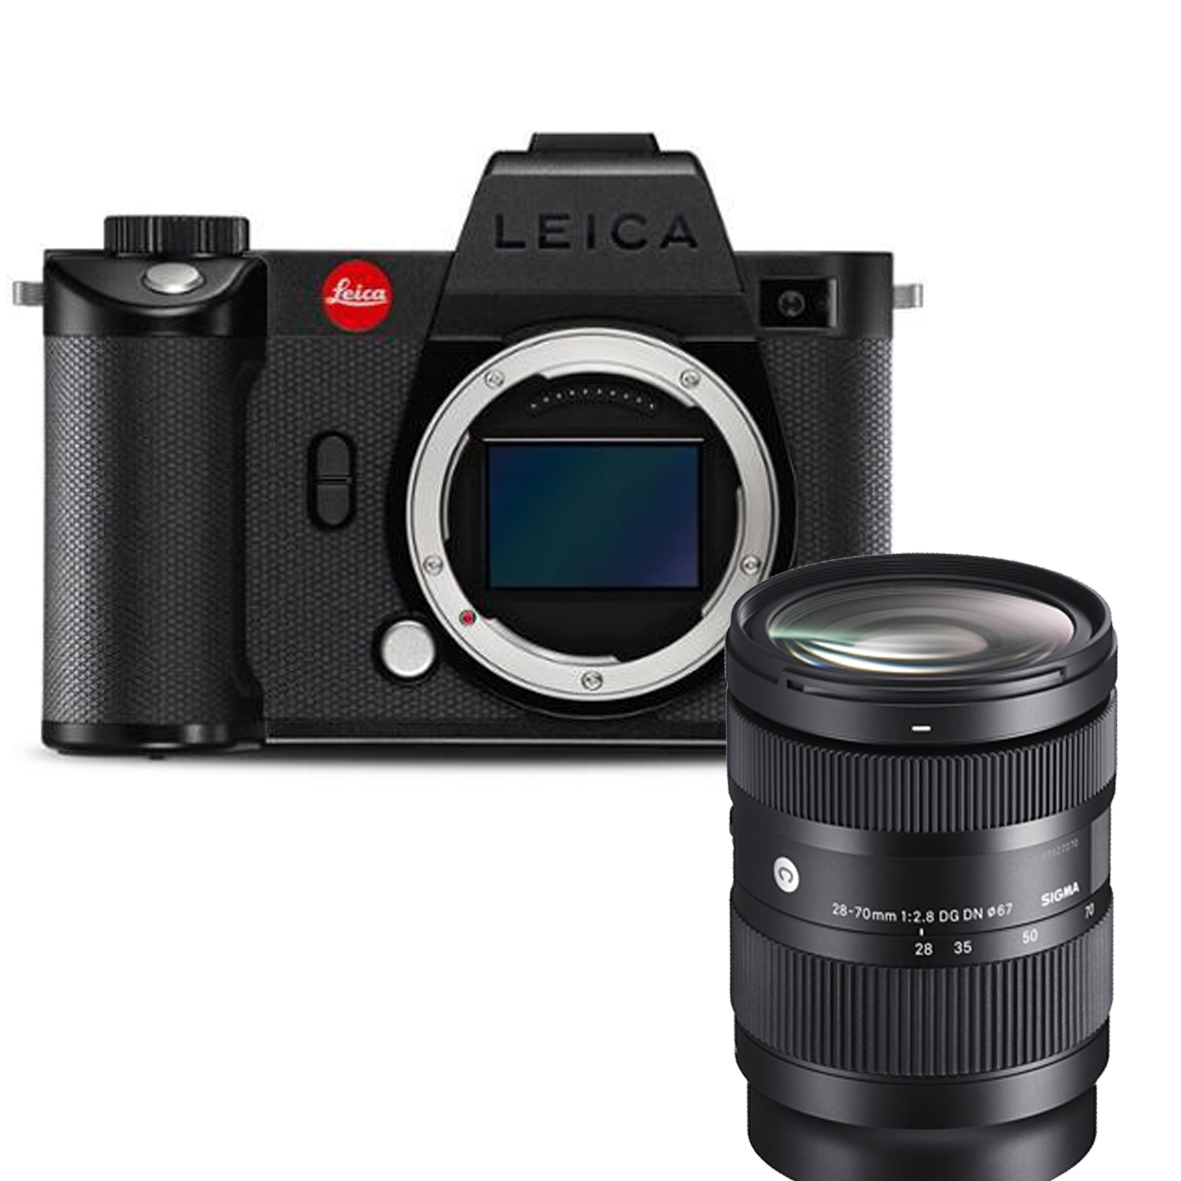 LEICA SL2-S schwarz 10880 + SIGMA 28-70mm 1:2.8 DG DN CON.  - SET